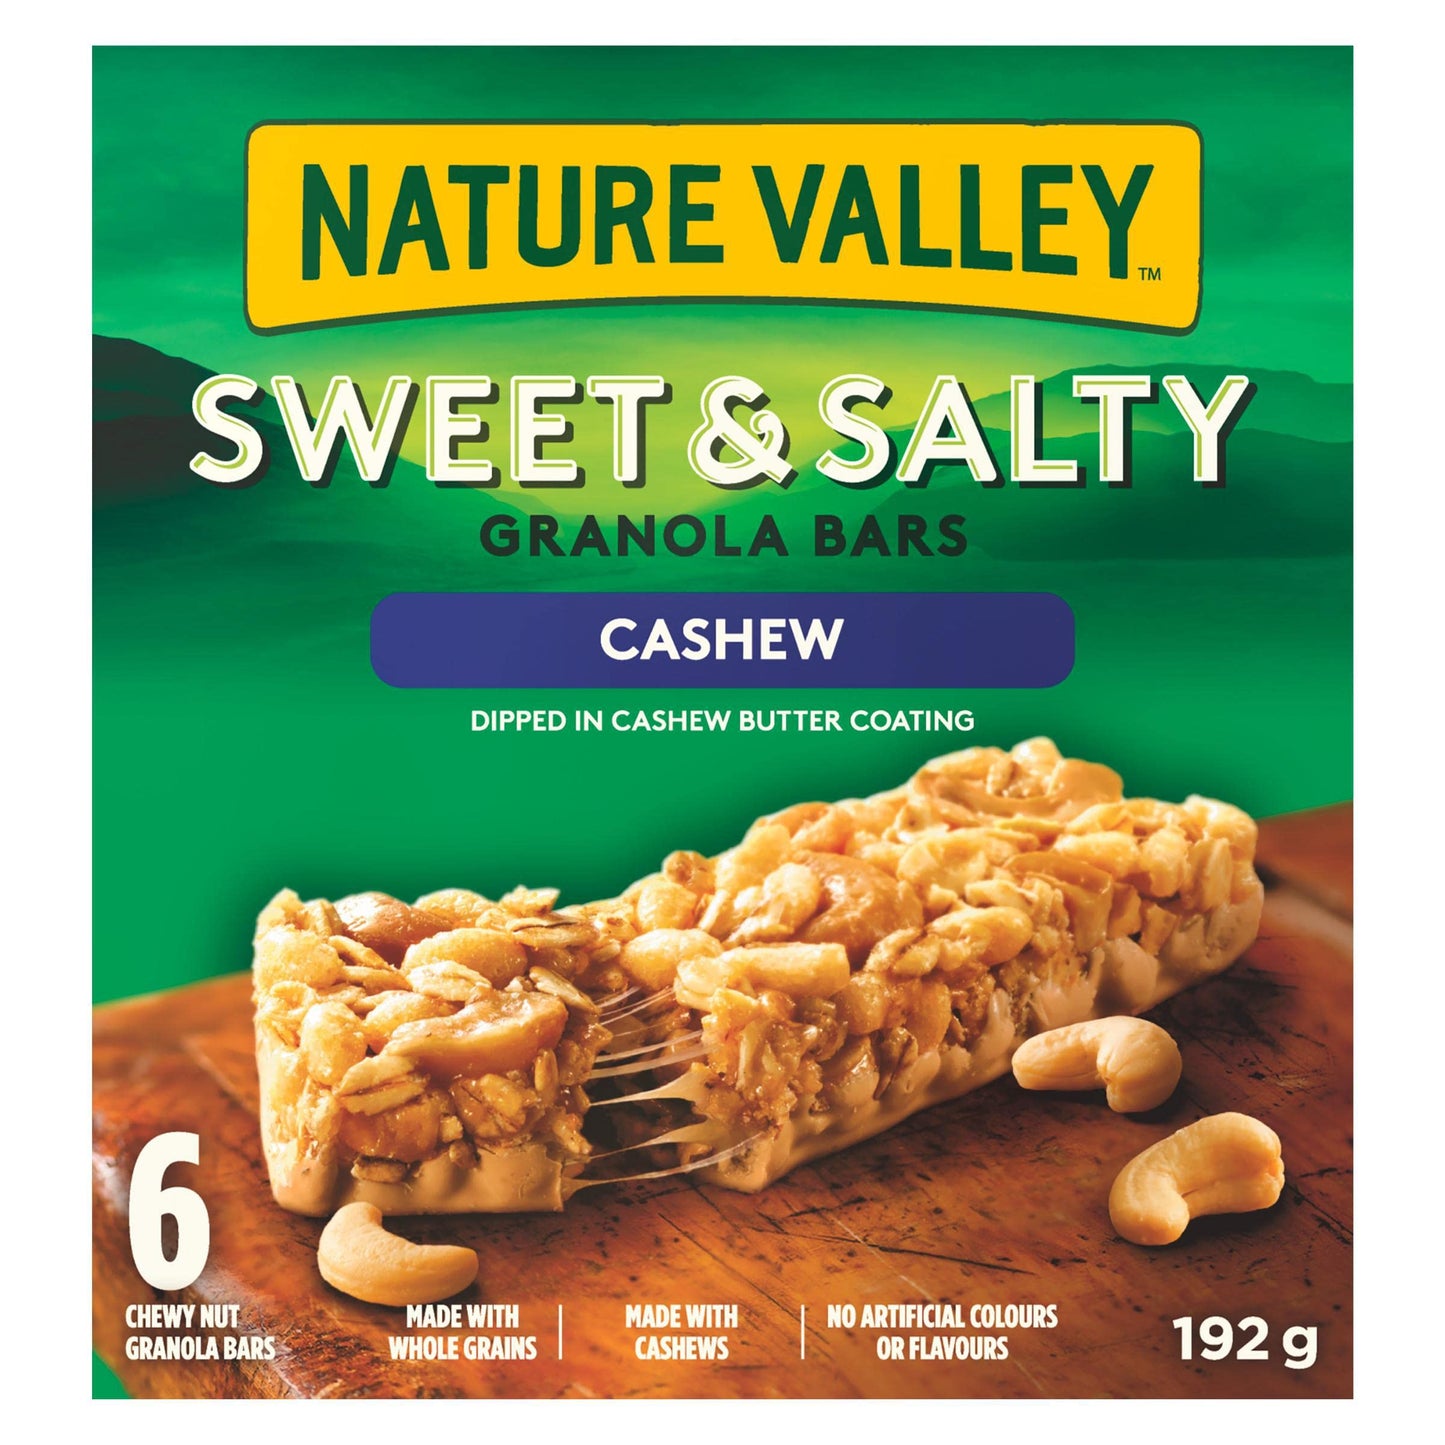 Nature Valley Sweet Salty Cashew Granola Bars